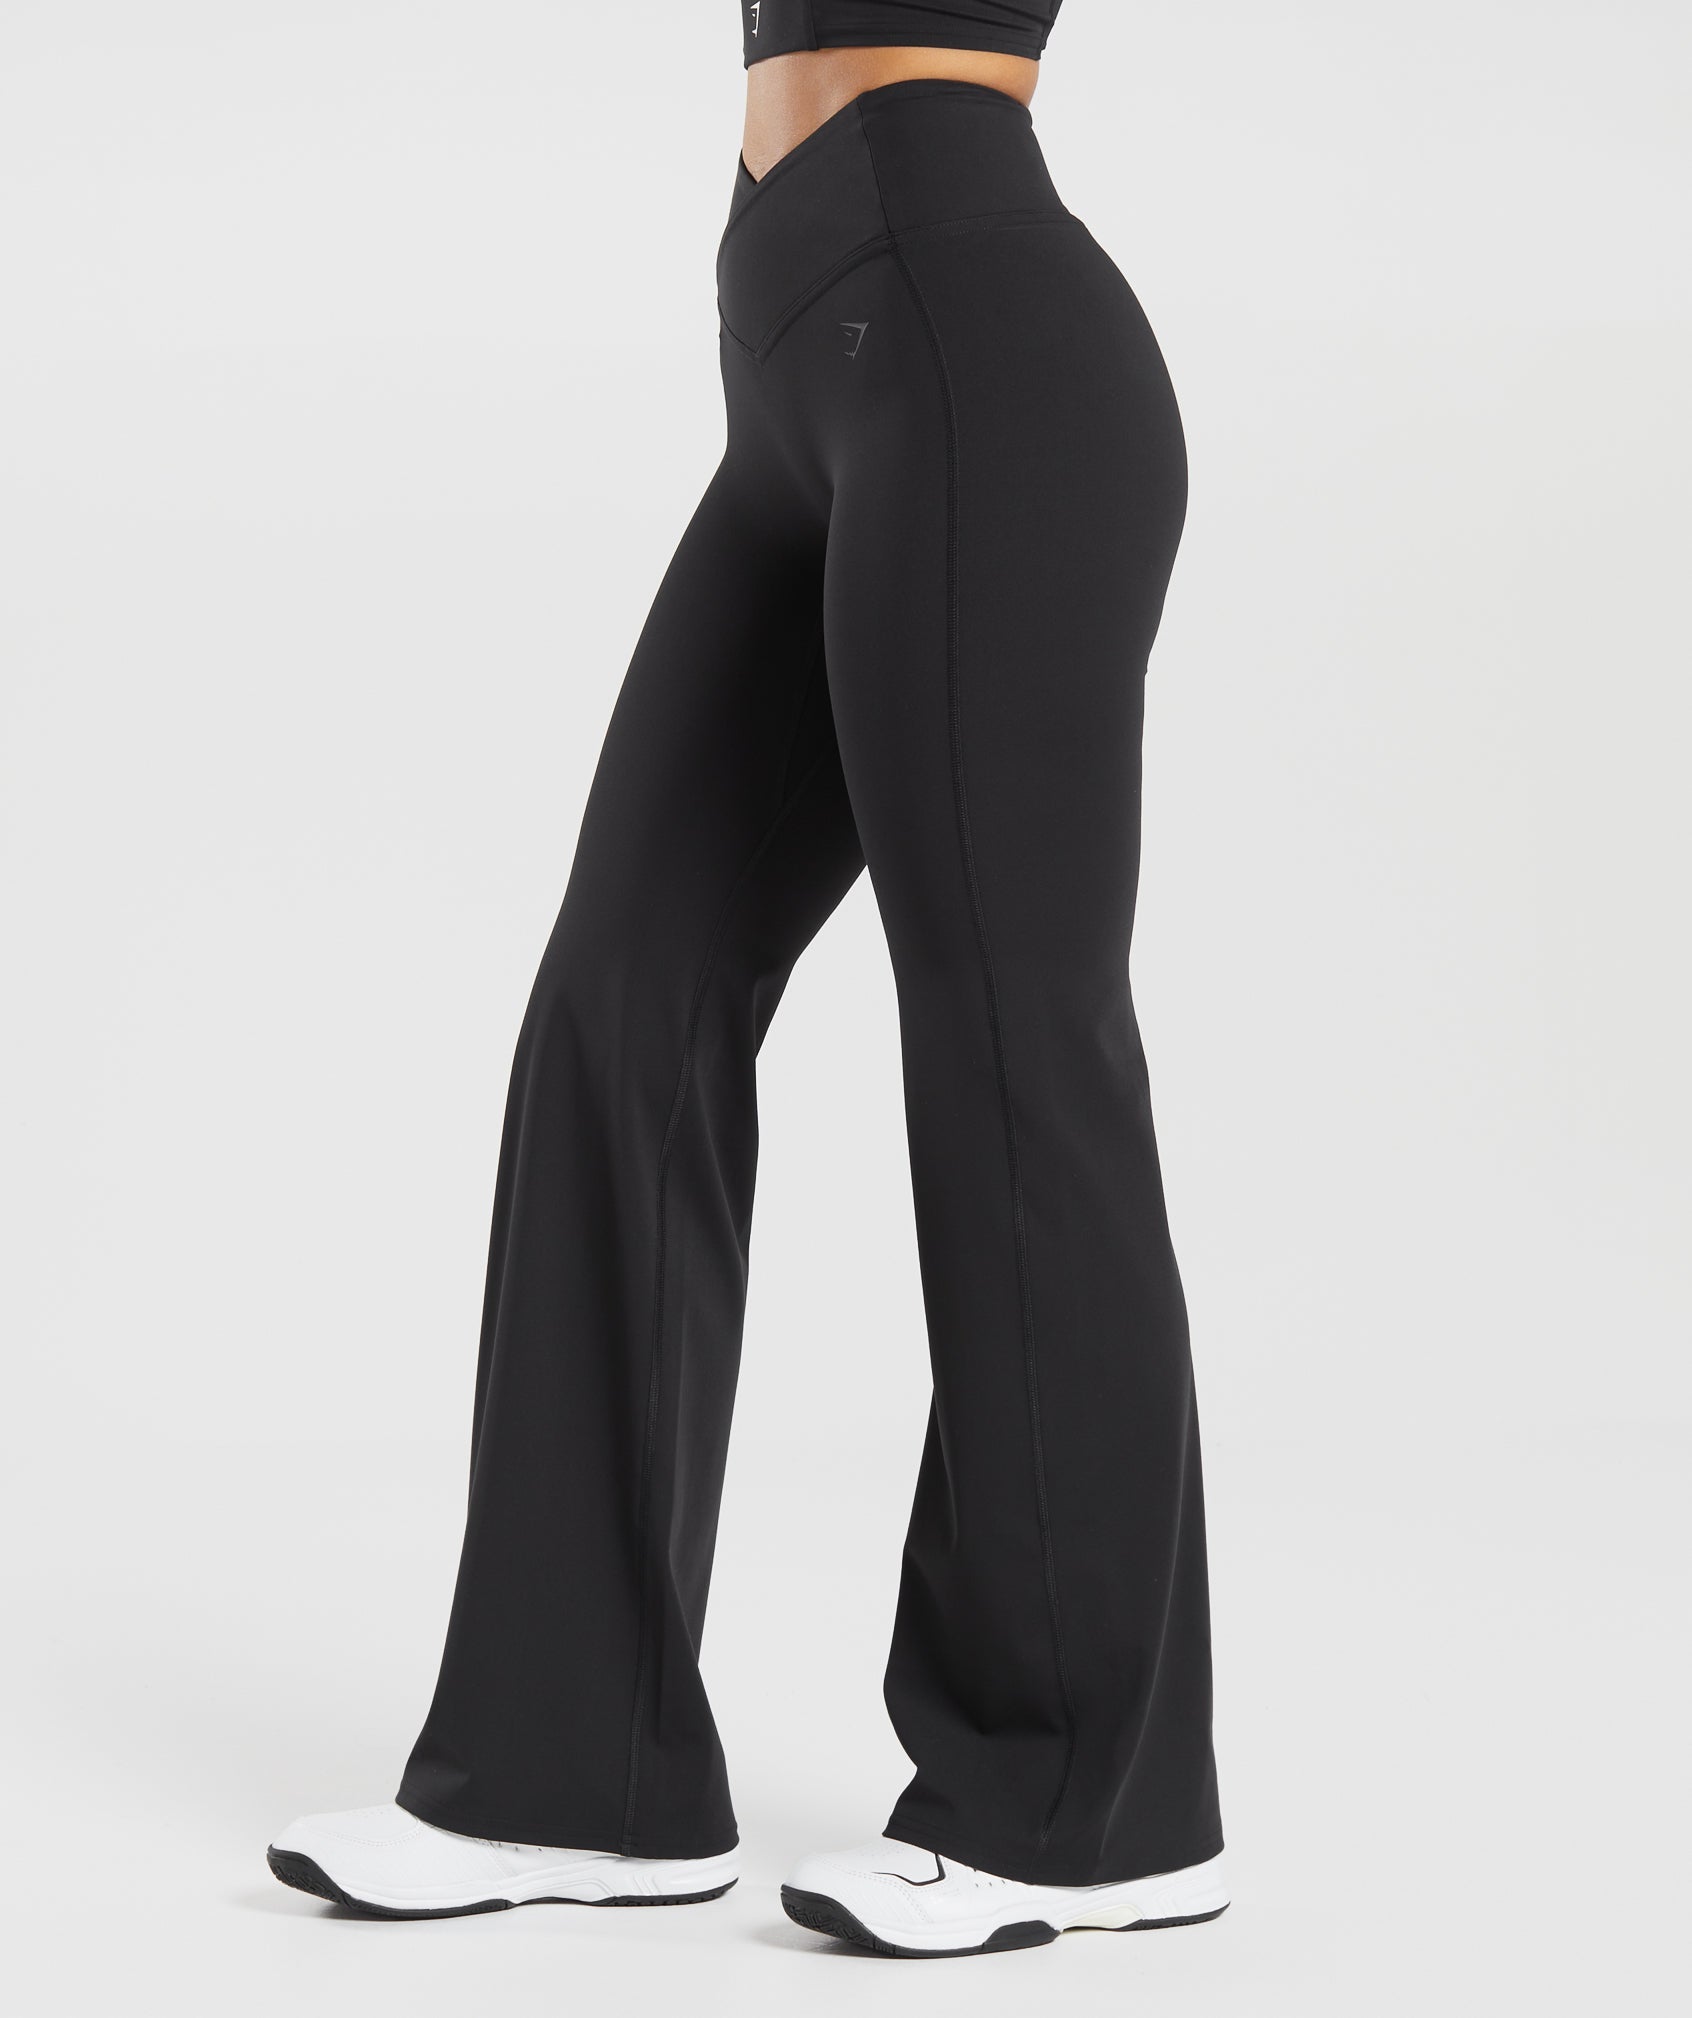 Lululemon Black Flare Leggings Size 6 - $65 (40% Off Retail) - From